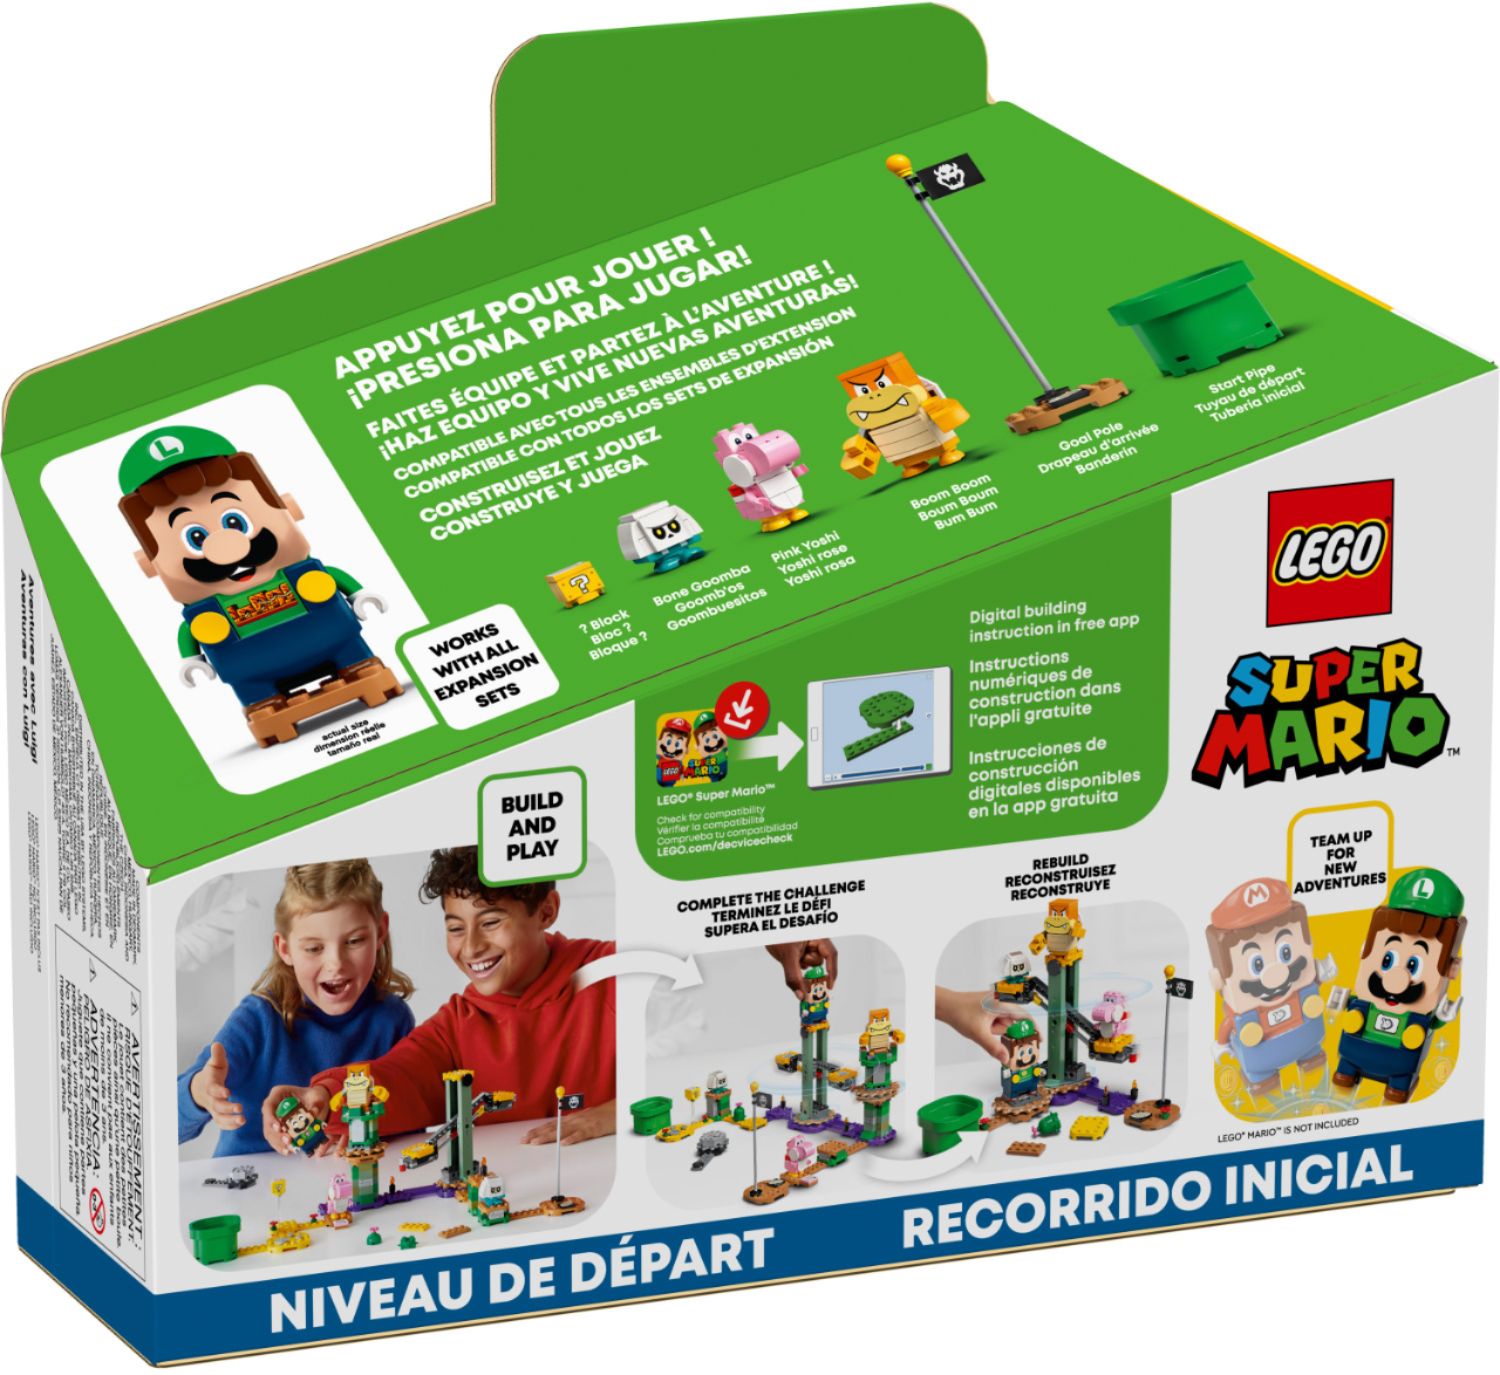 Instructions/Parts List for Custom LEGO Nintendo Luigi Figure